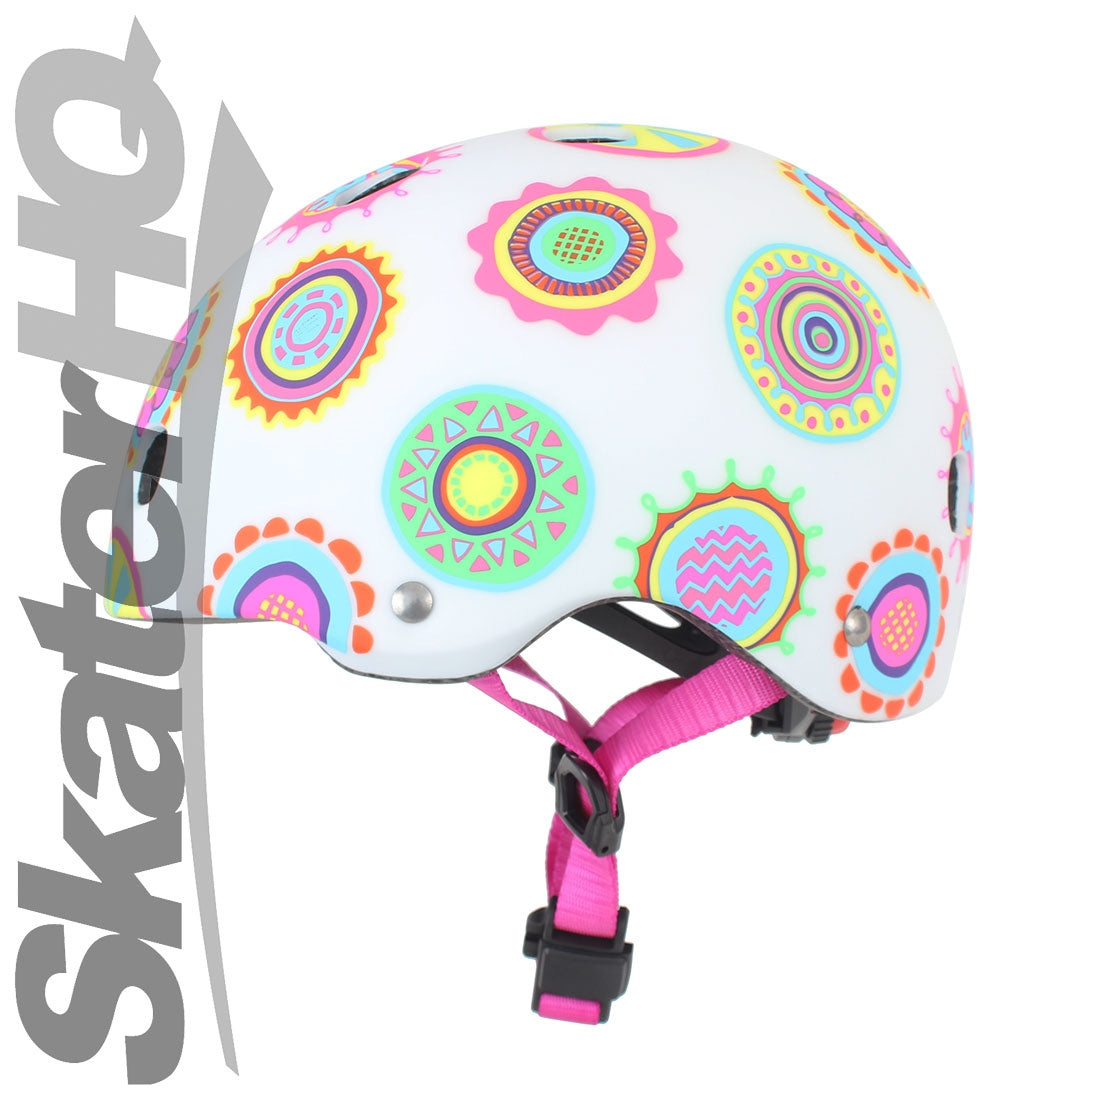 Micro Doodle Dots LED Helmet - XSmall Helmets